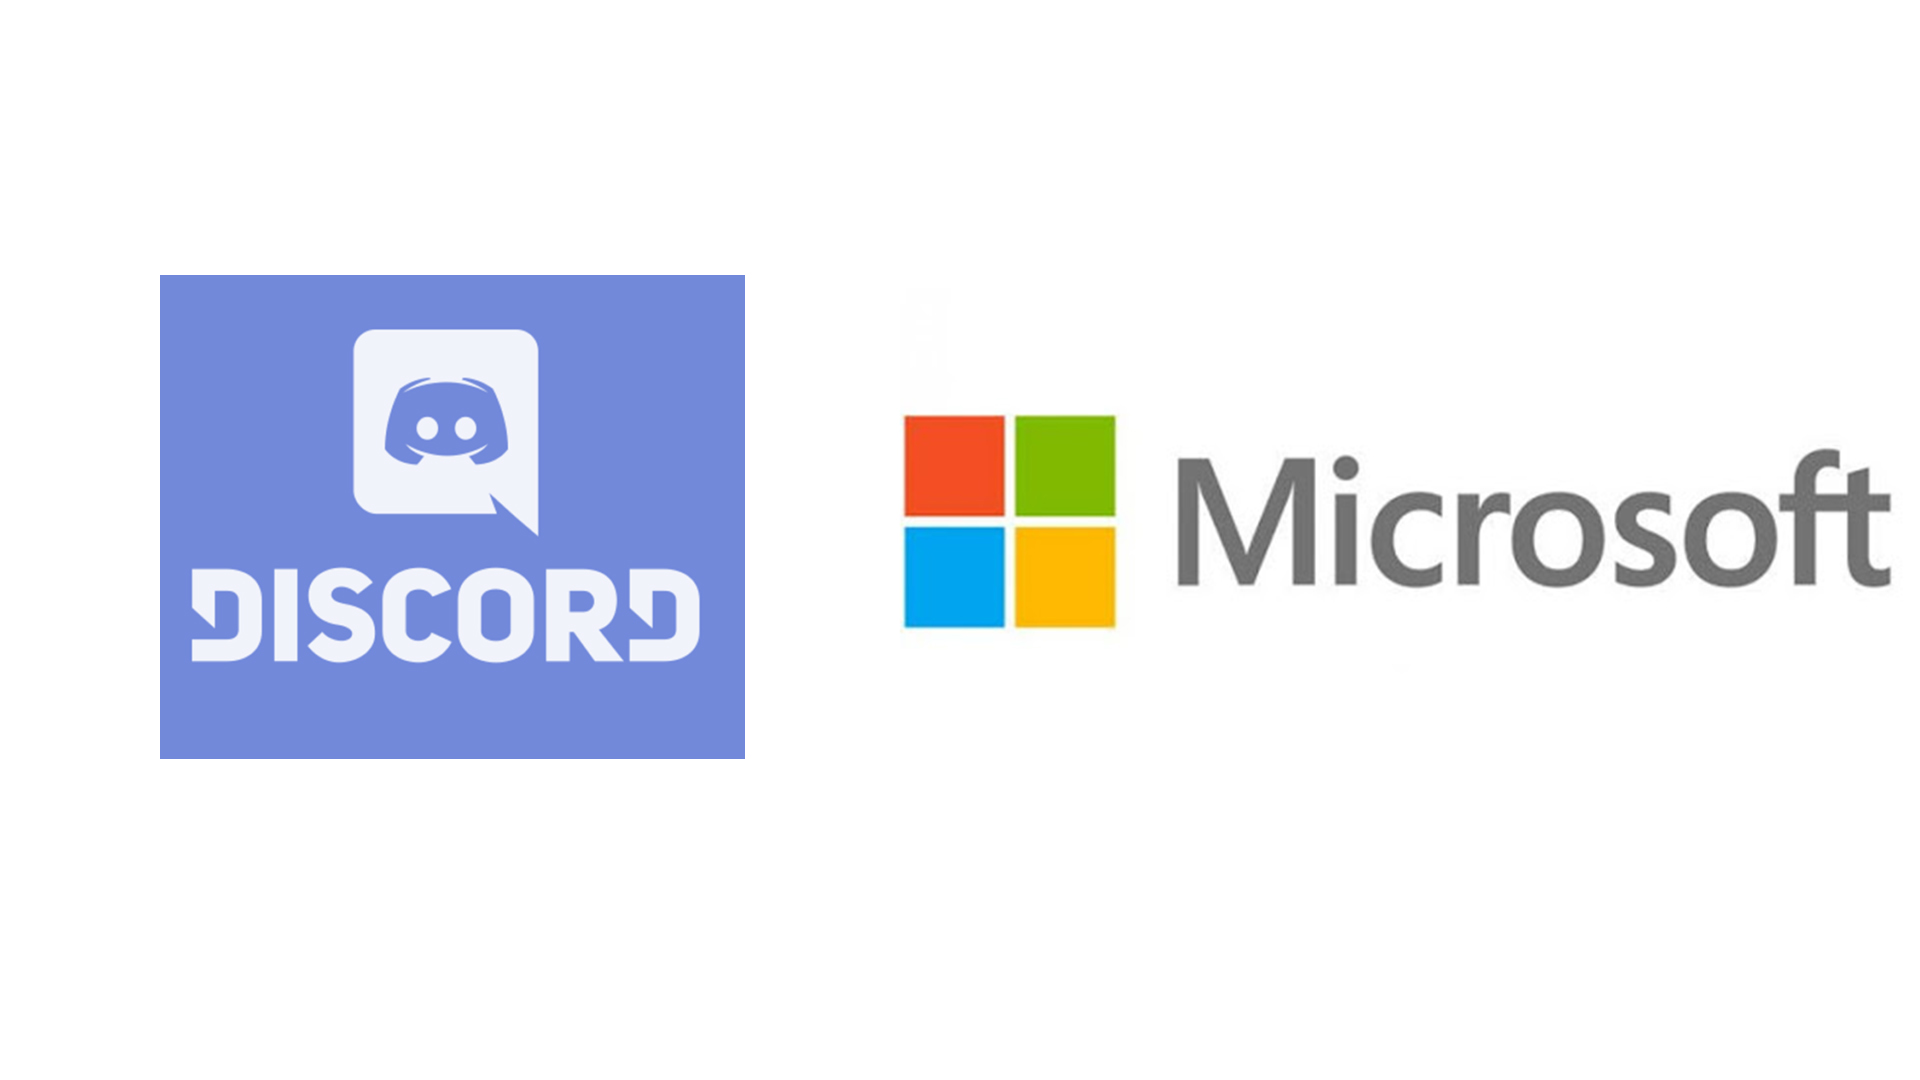 Discord and Microsoft